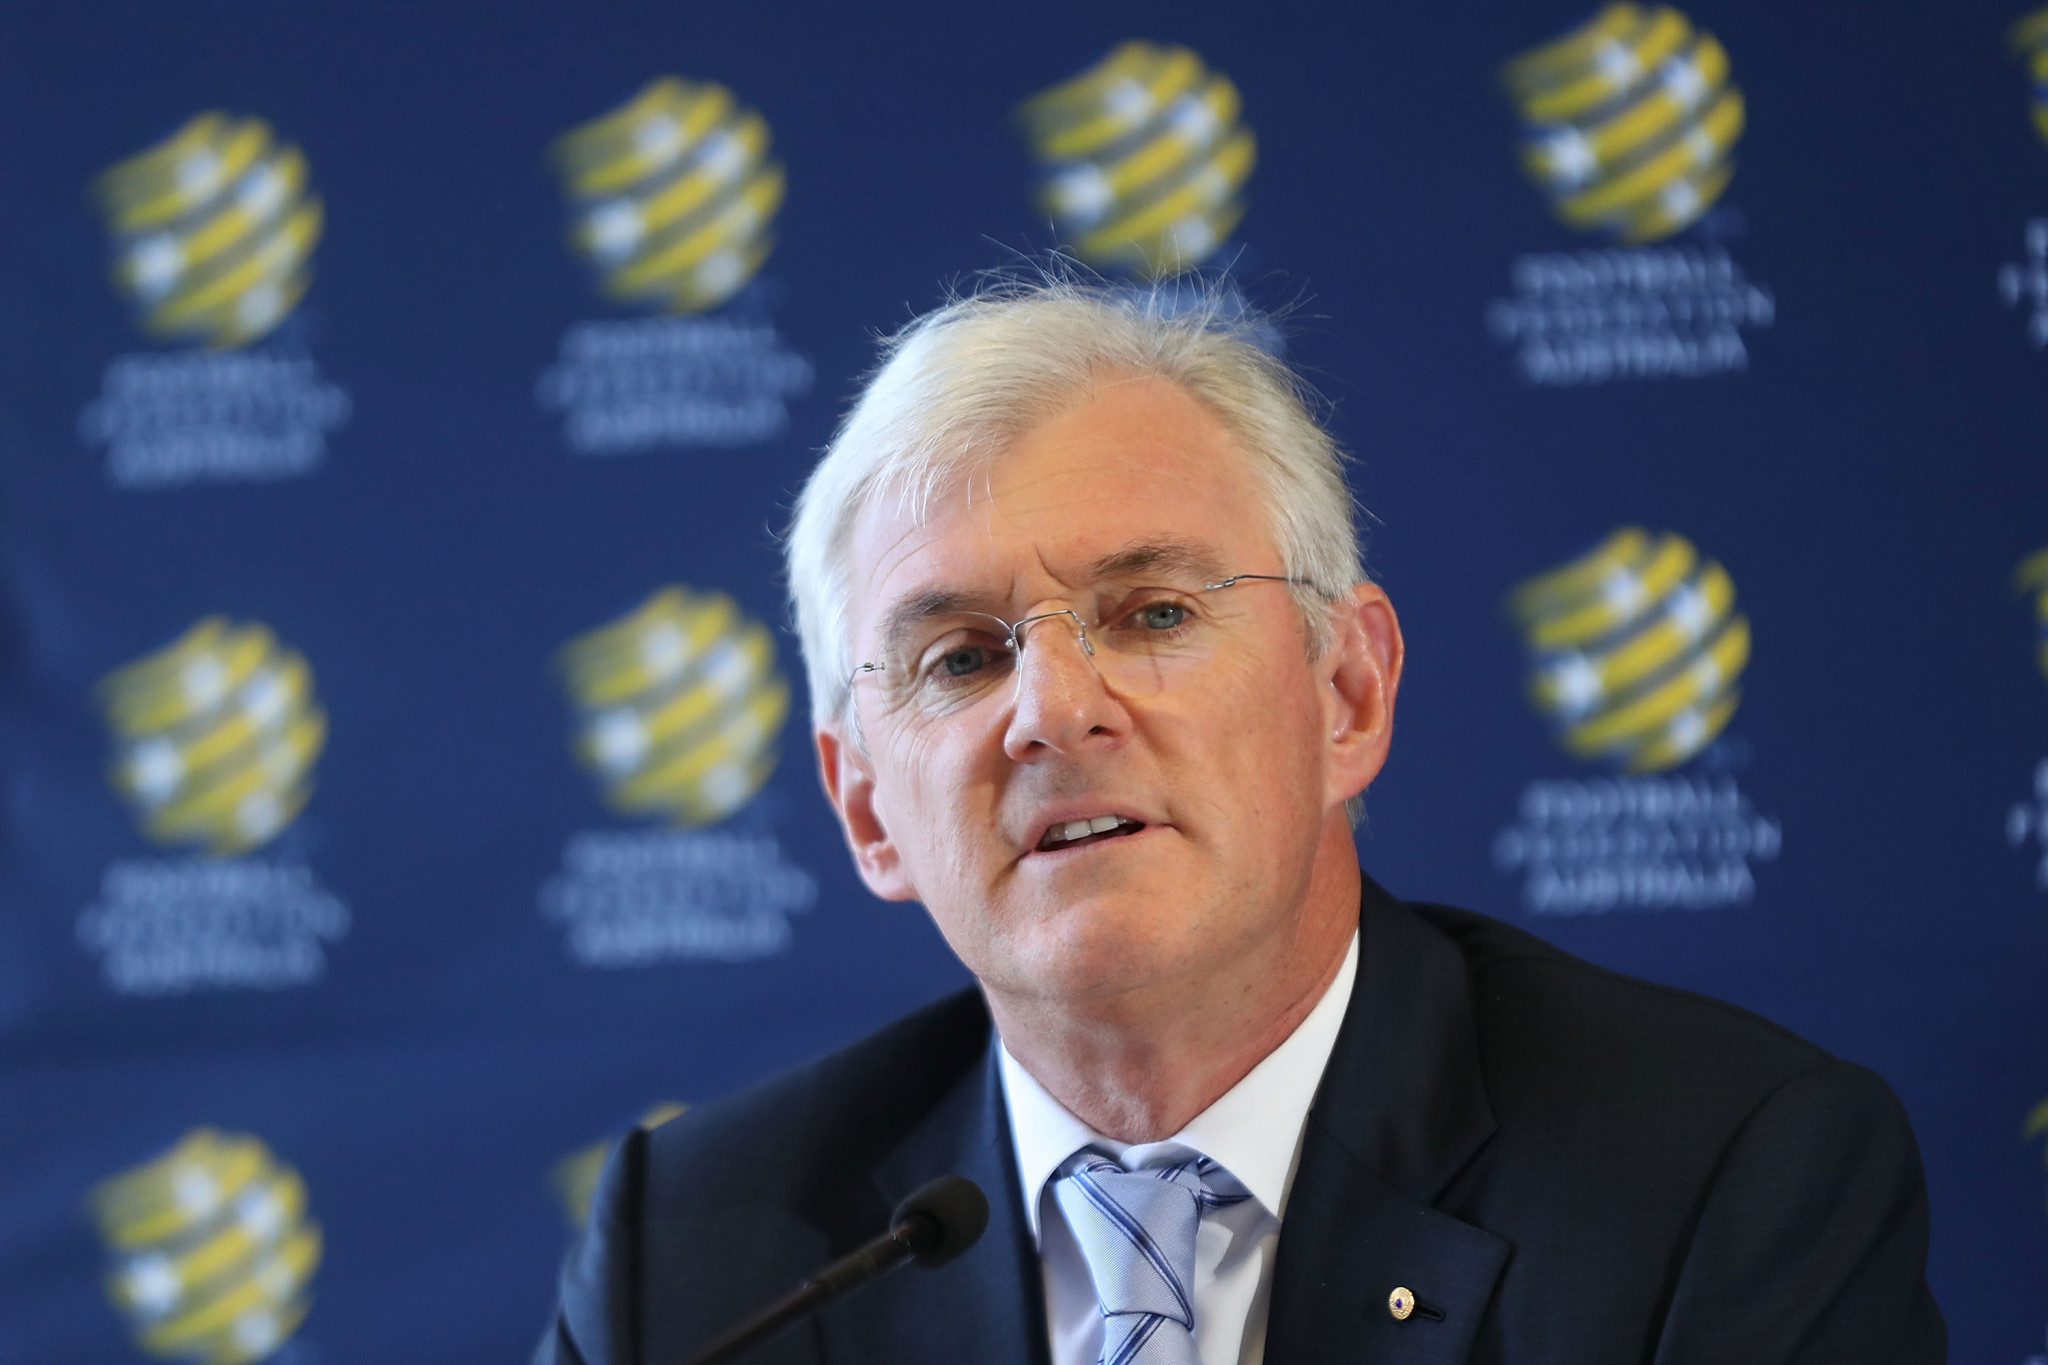 Football Federation Australia chairman to quit amid governance dispute